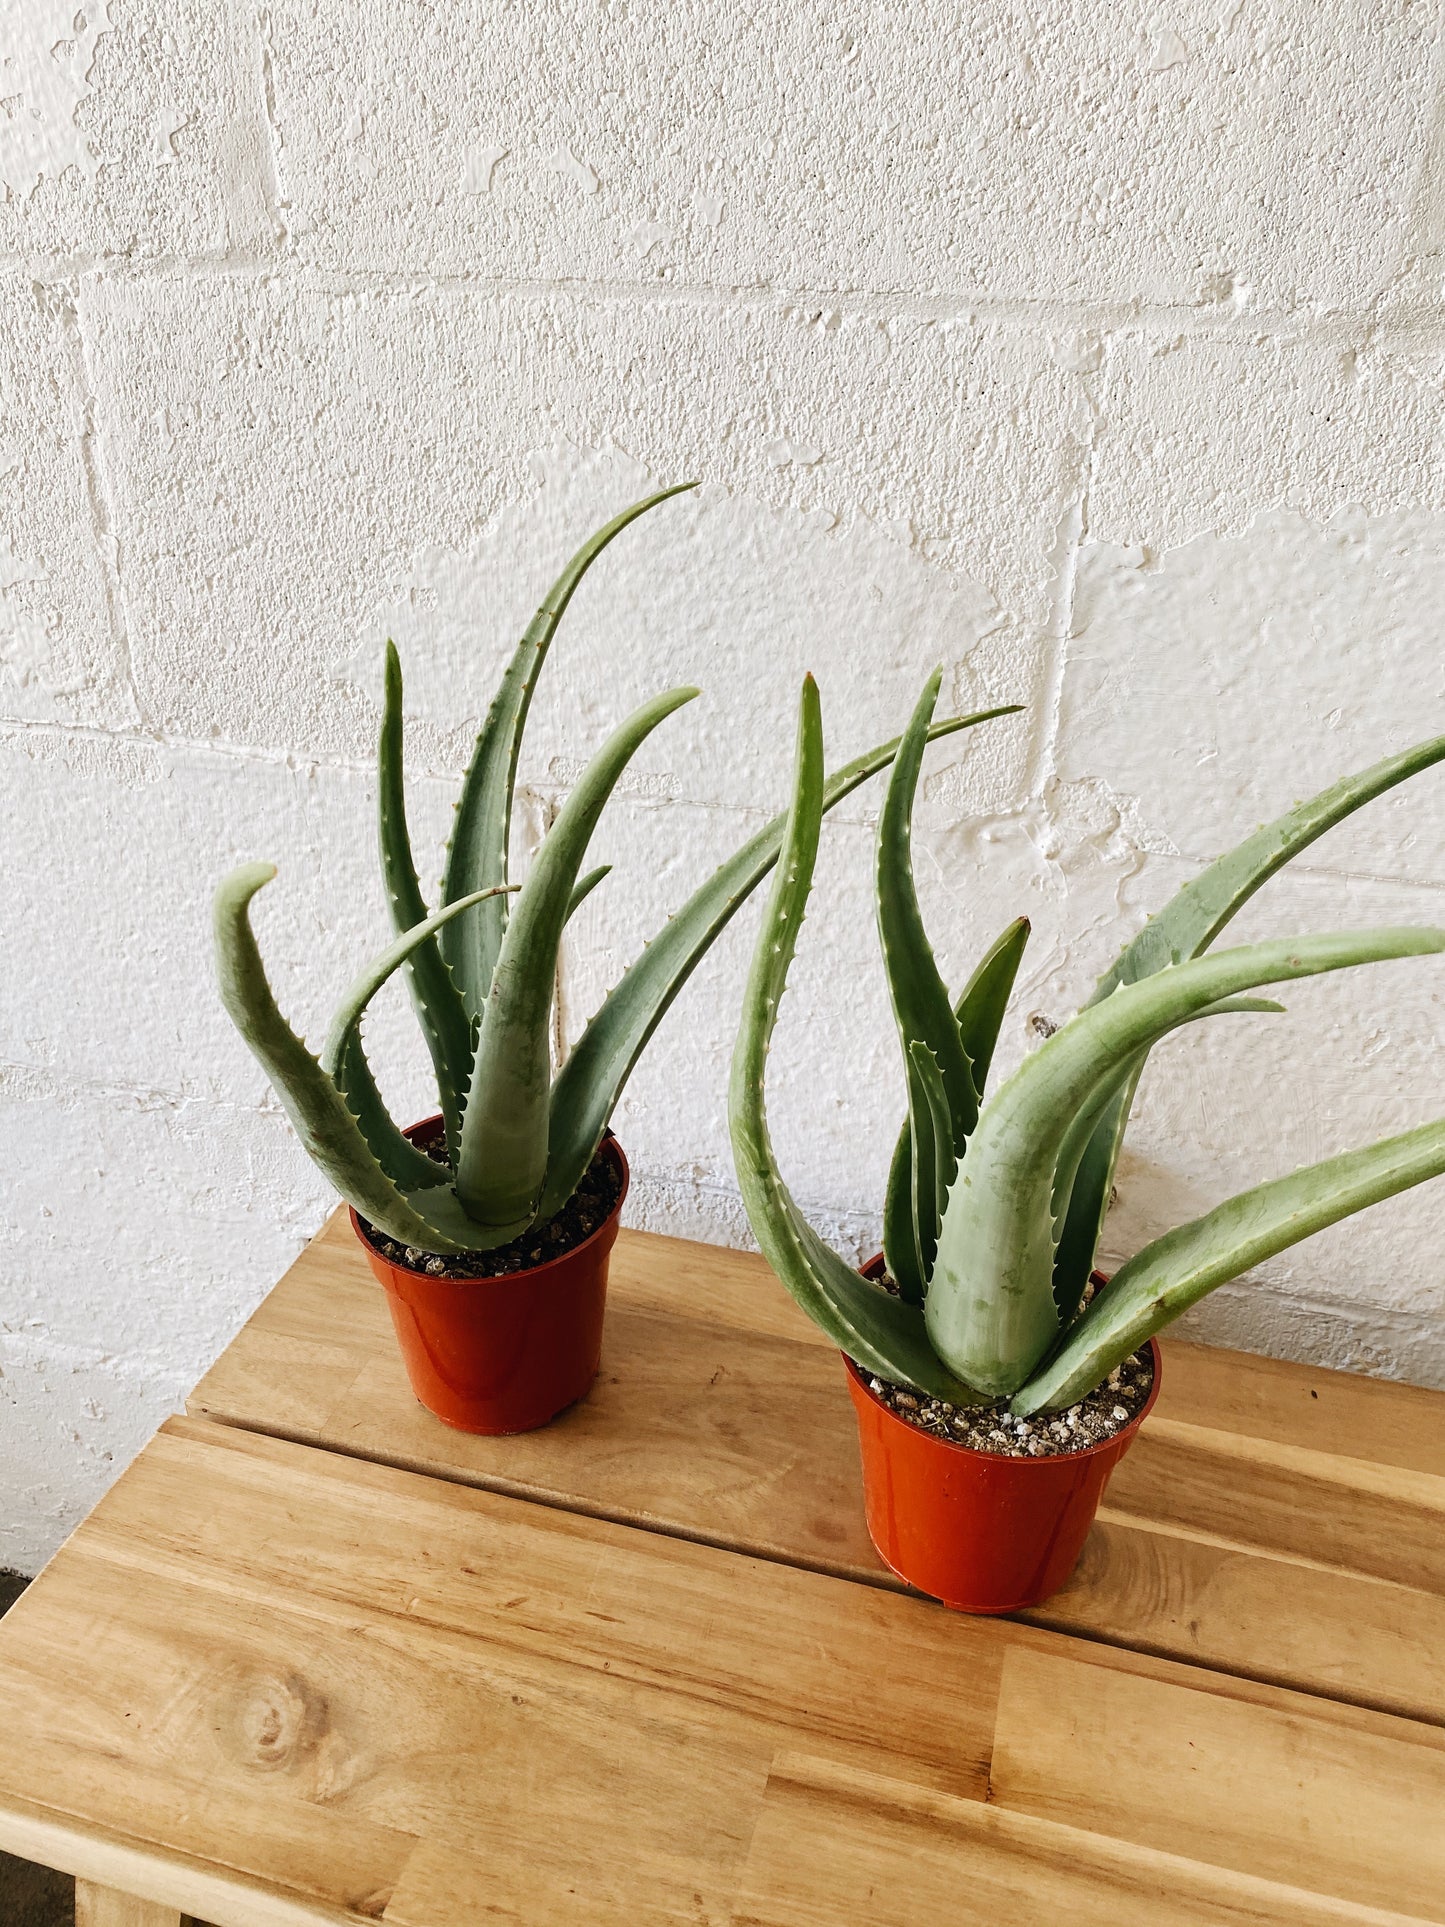 4” Cali Grown Aloe Vera